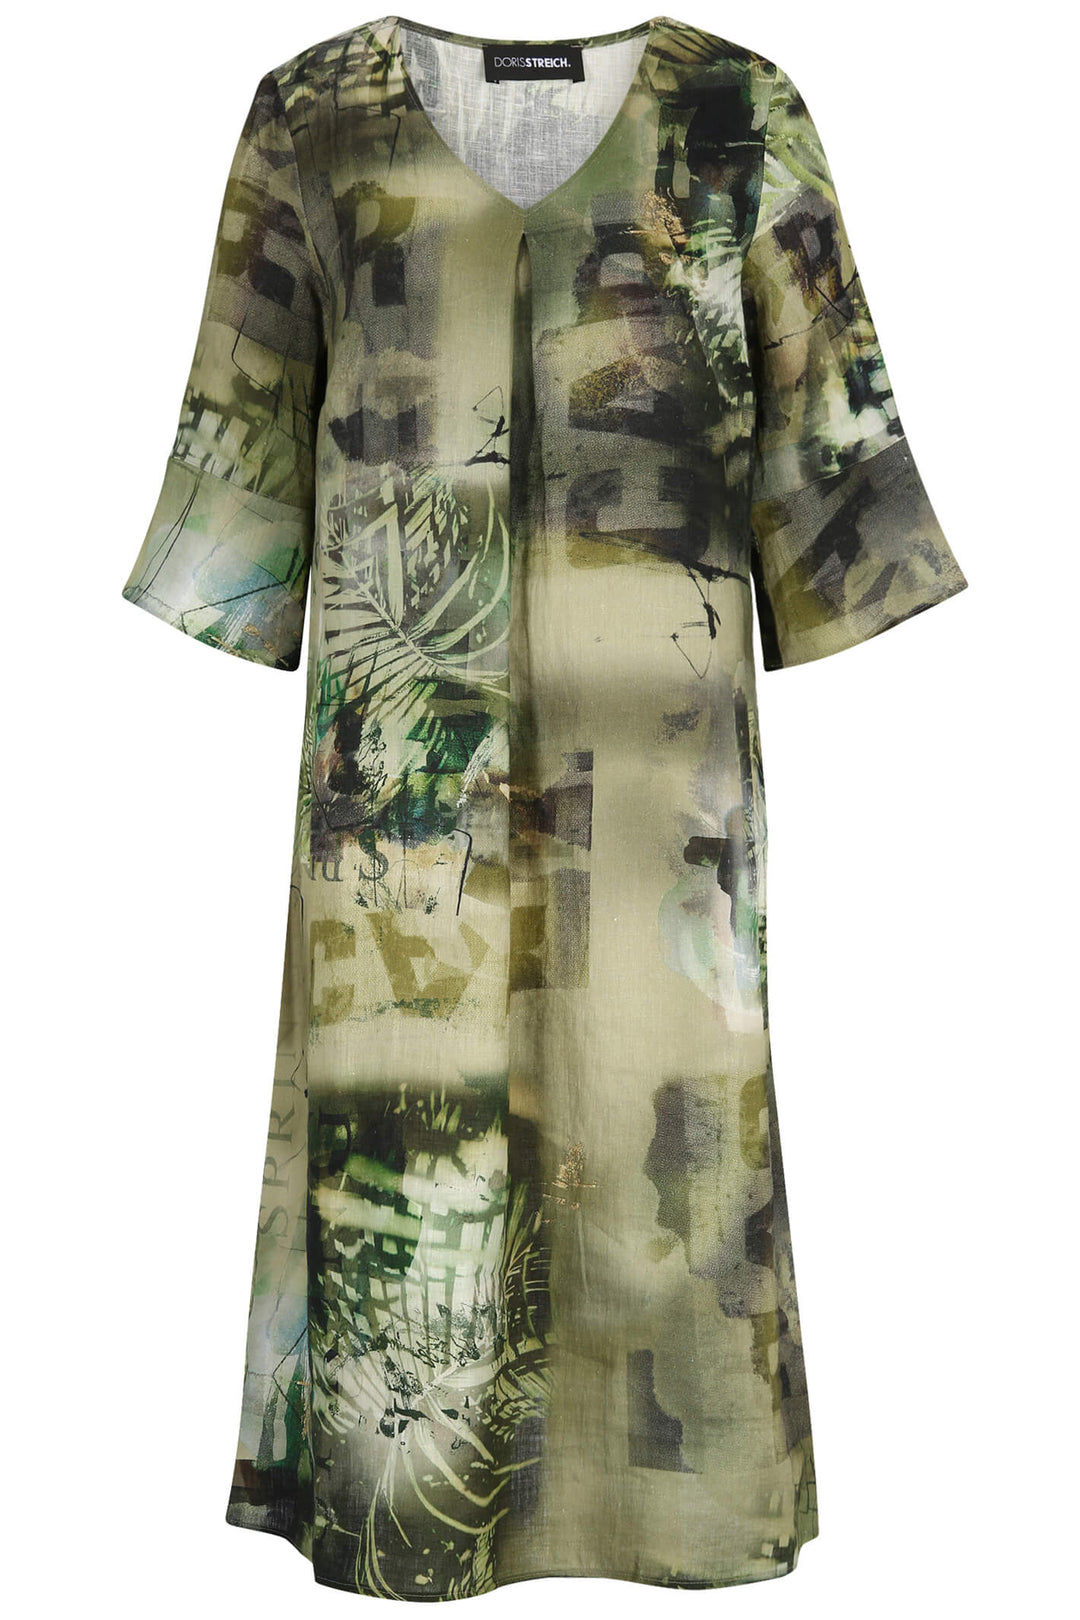 Doris Streich 637 668 Khaki Green Print Dress